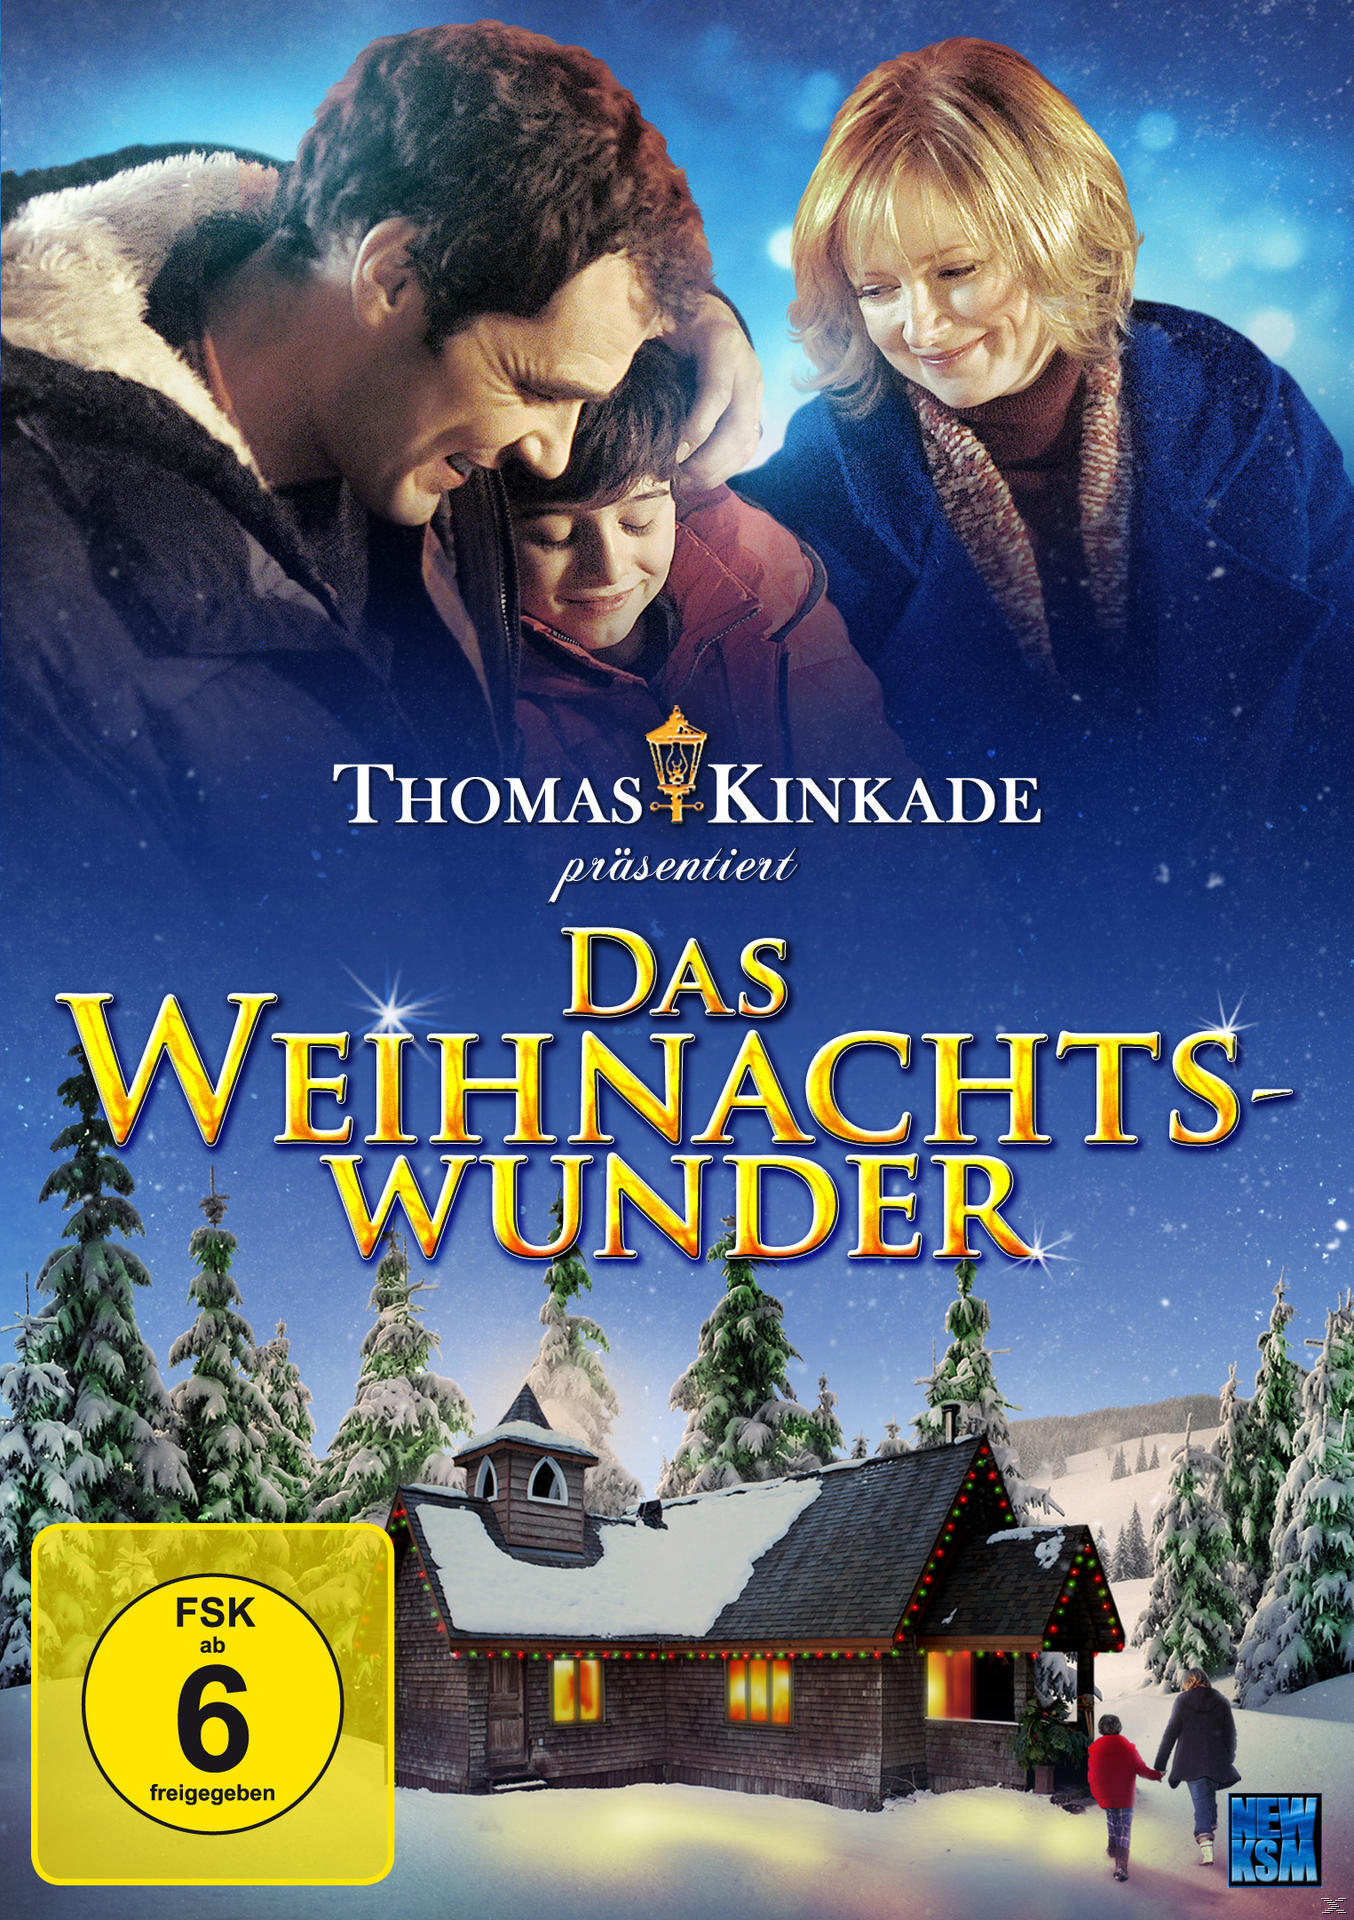 Weihnachtswunder Das Thomas DVD – Kinkade